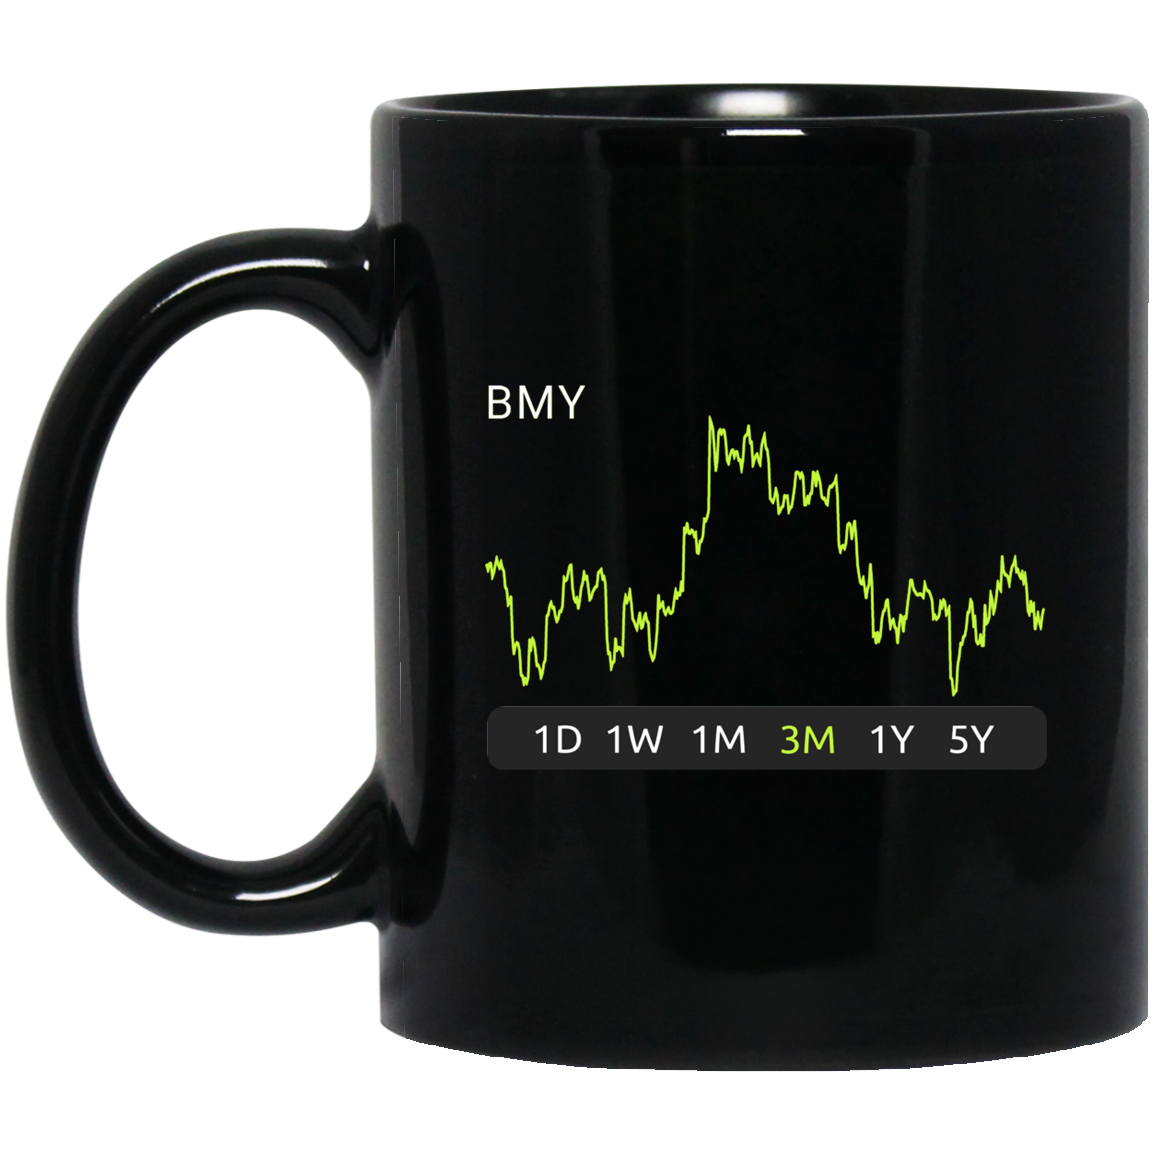 BMY Stock 3m Mug